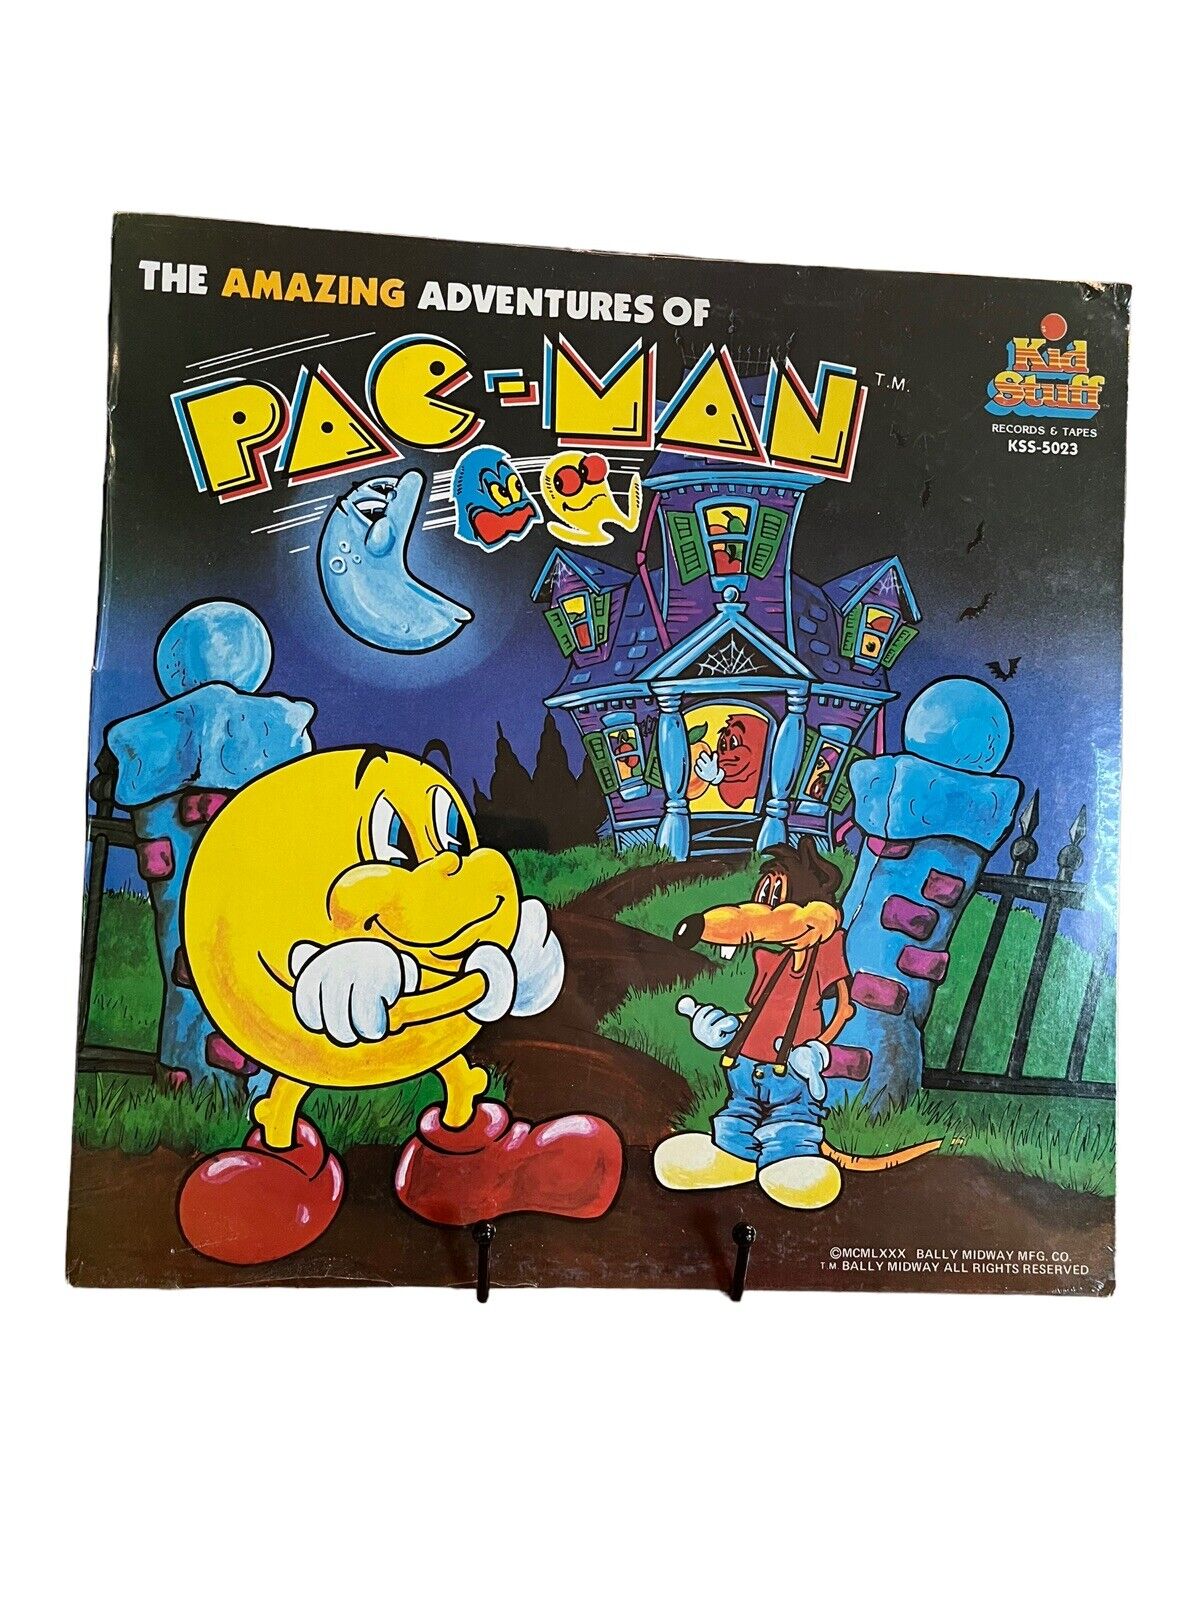 ALBUM New Vintage Amazing Adventure Pac-Man LP Vinyl Record FACTORY SEALED Nip